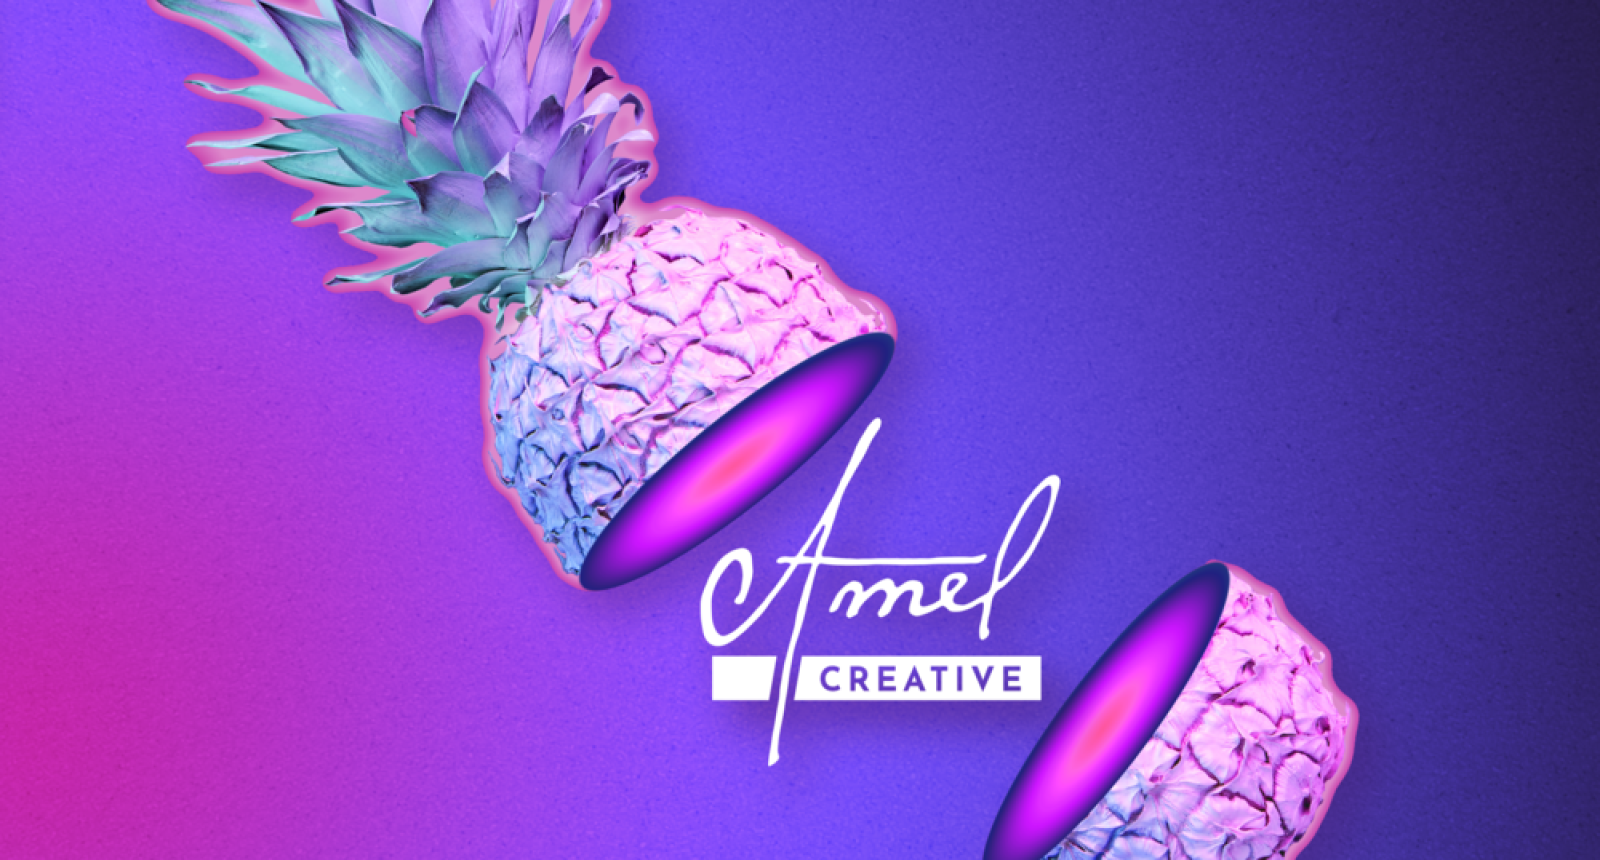 amel creative design agency